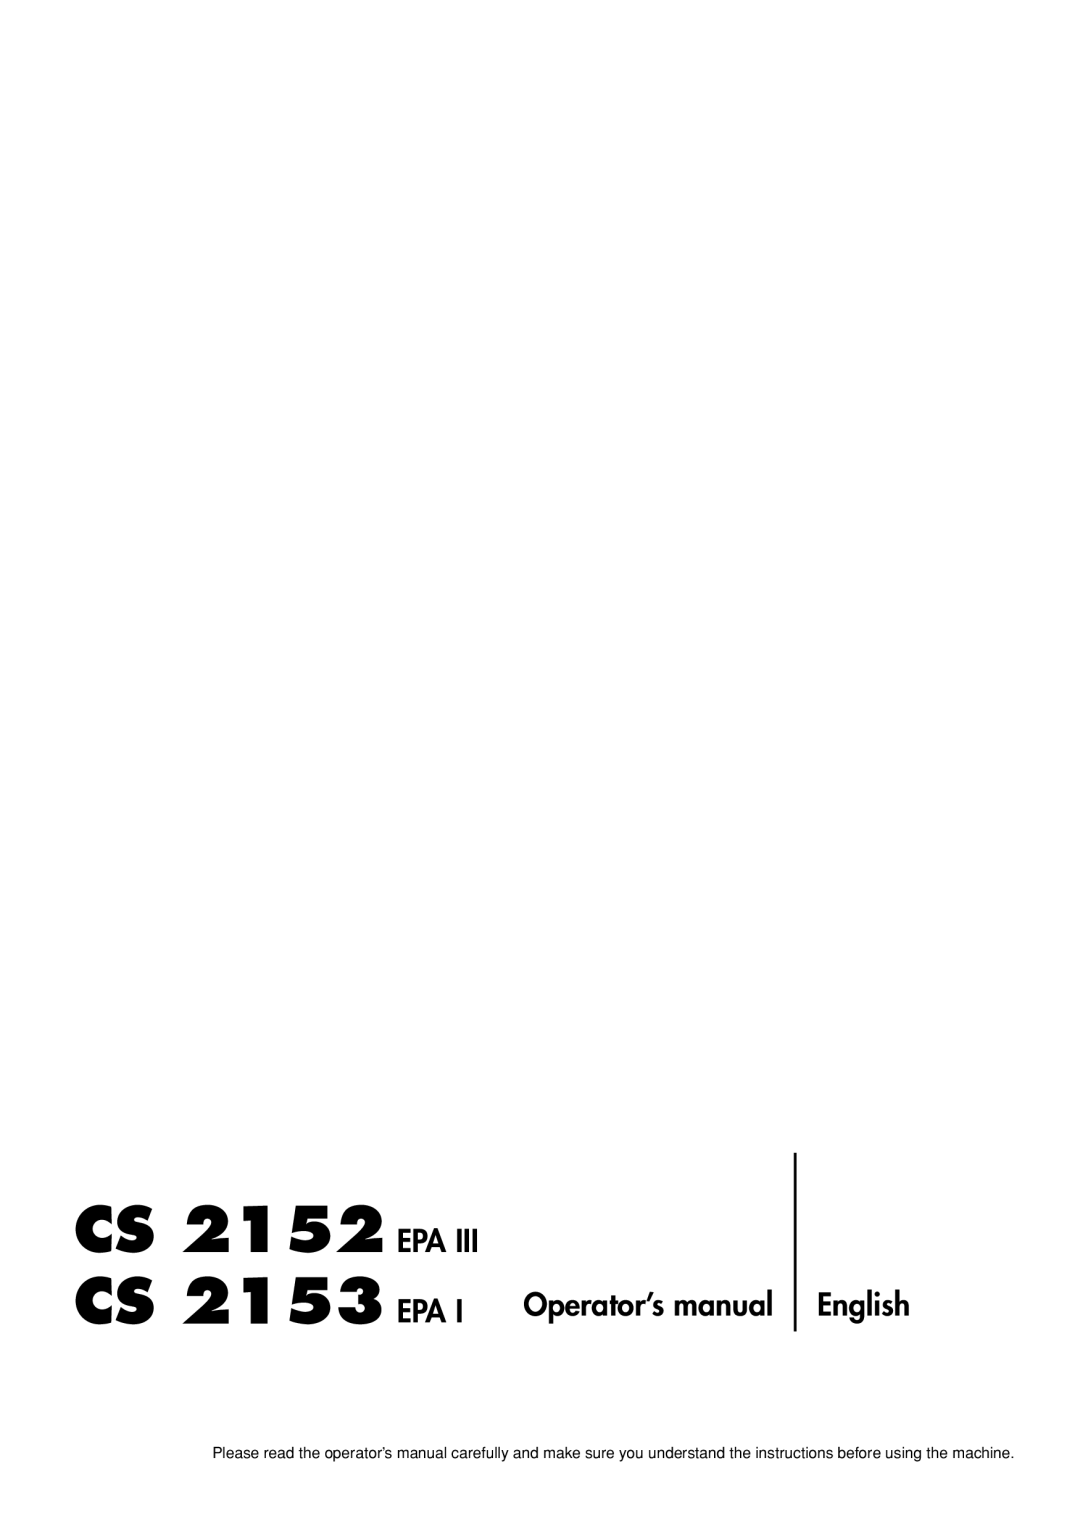 Jonsered CS 2152 EPA III, CS 2153 EPA I manual CS 2152 CS, Operator’s manual, English 